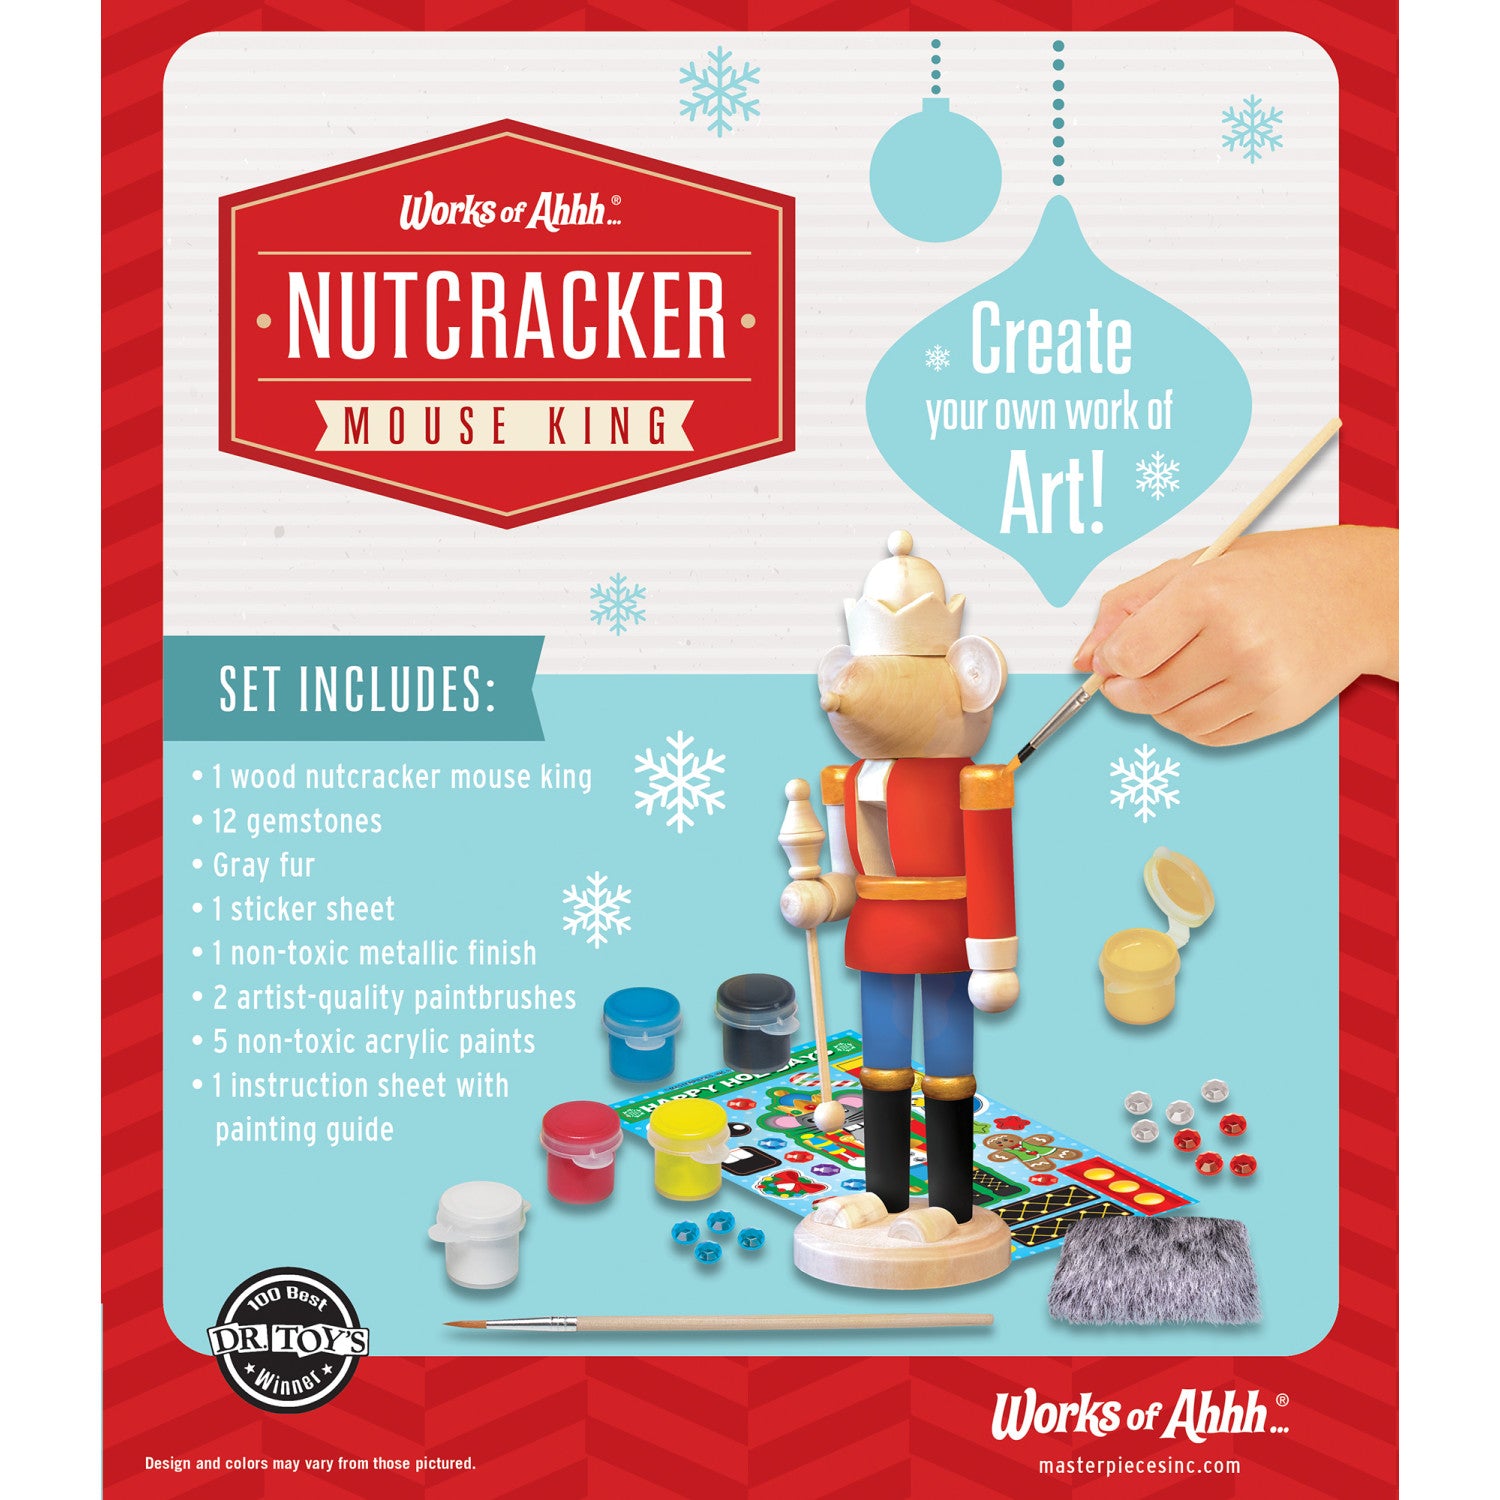 Holiday Craft Kit - Nutcracker Mouse King Wood Paint Kit